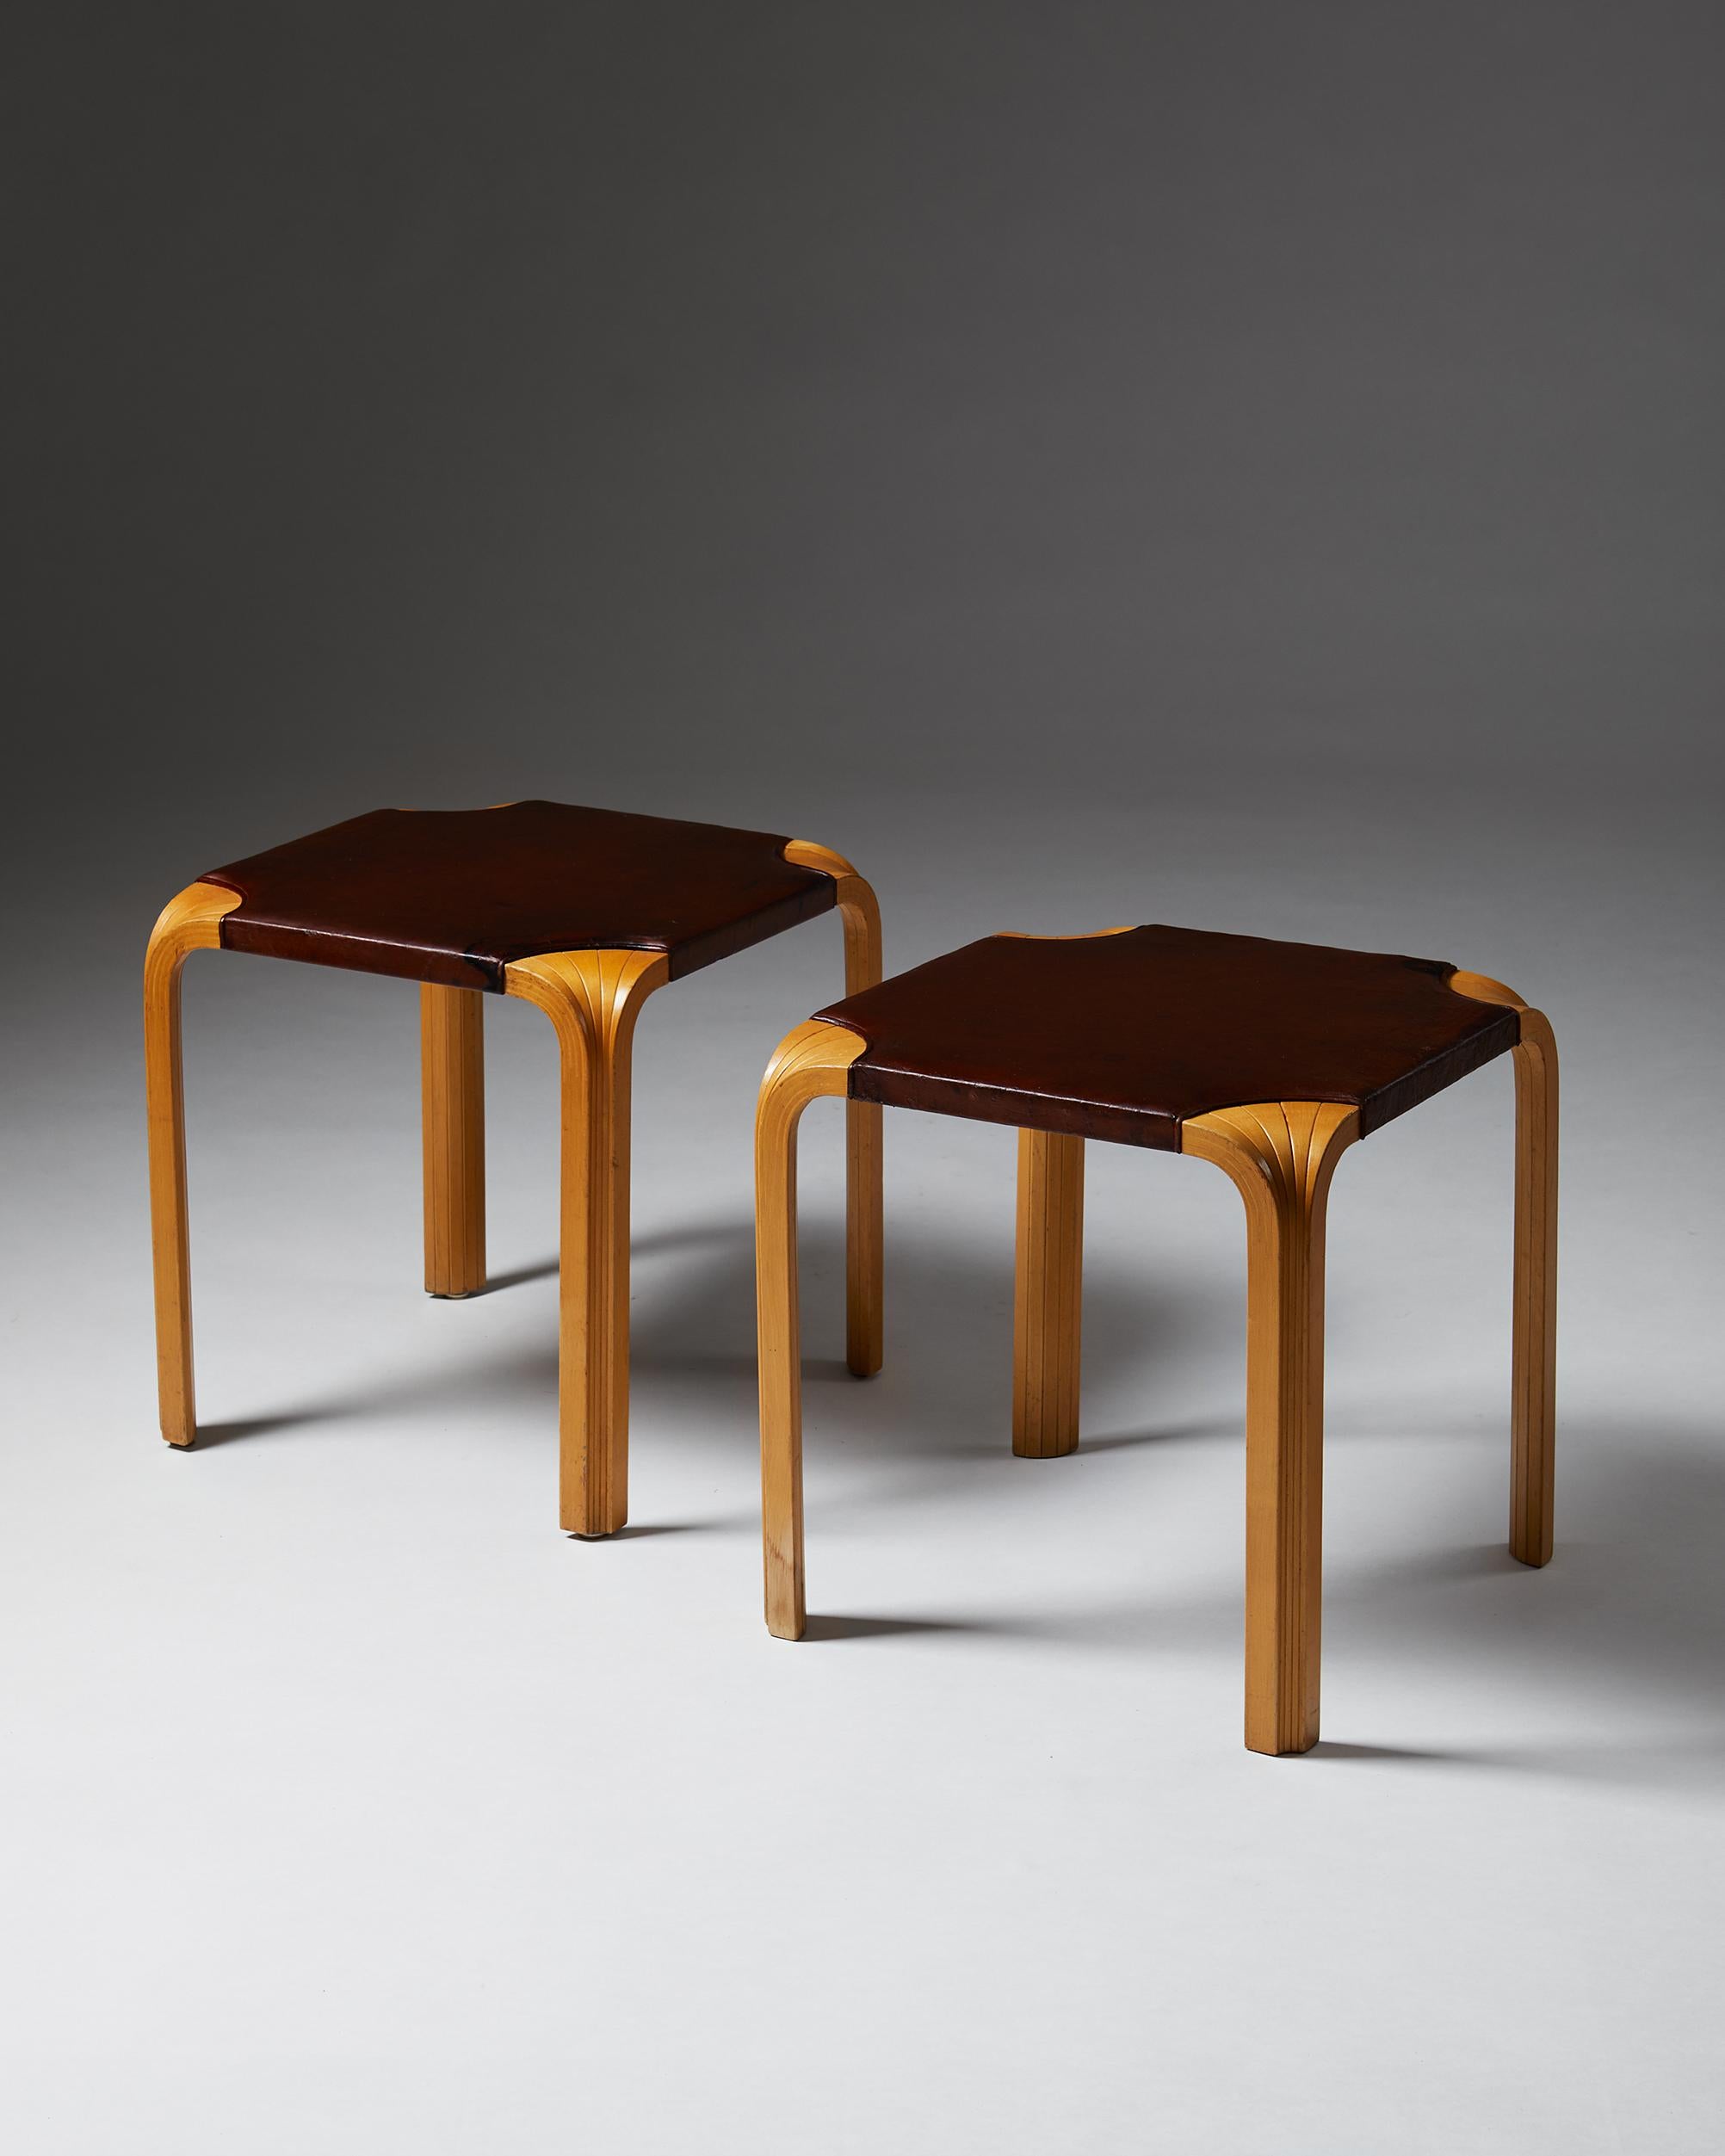 Pair of fan-leg stools, model S601, designed by Alvar Aalto for Artek,
Finland, 1954.
Birch and original leather.

Measures: L 45 cm/ 17 3/4